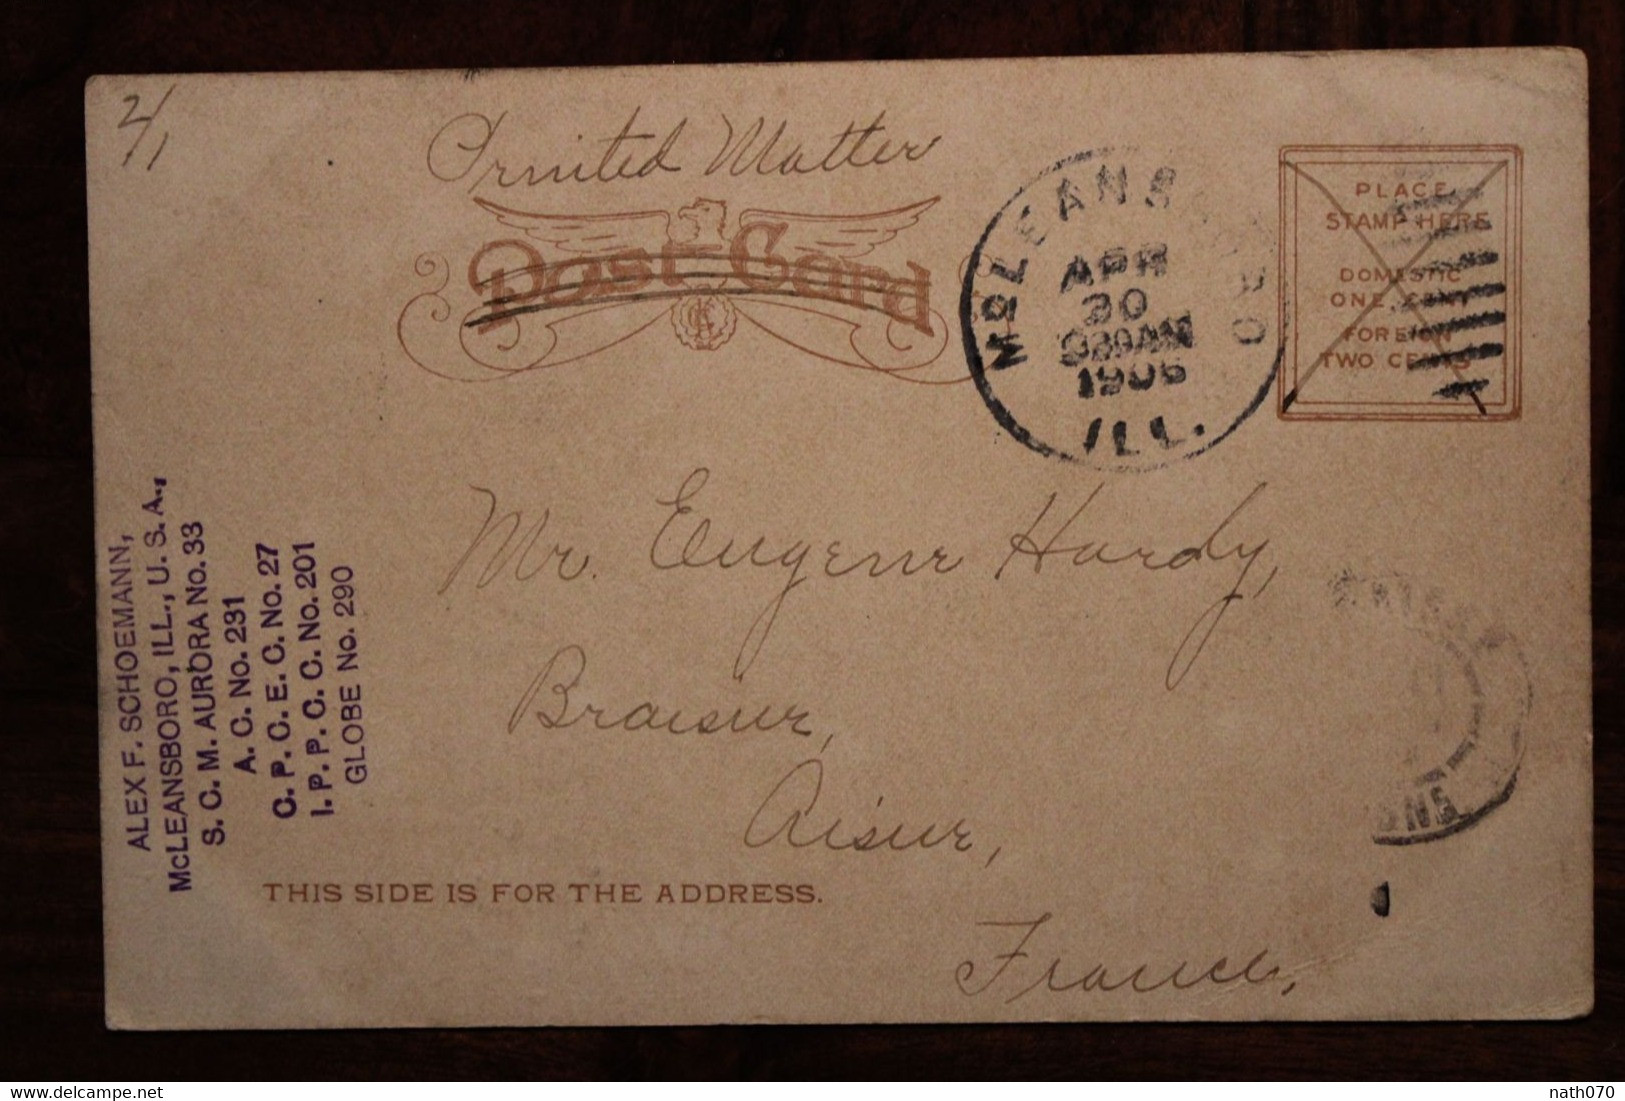 CPA Ak 1906 McLeansboro ILL Grand Boulevard Chicago USA Us Postcard Braisne France Aisne - Lettres & Documents